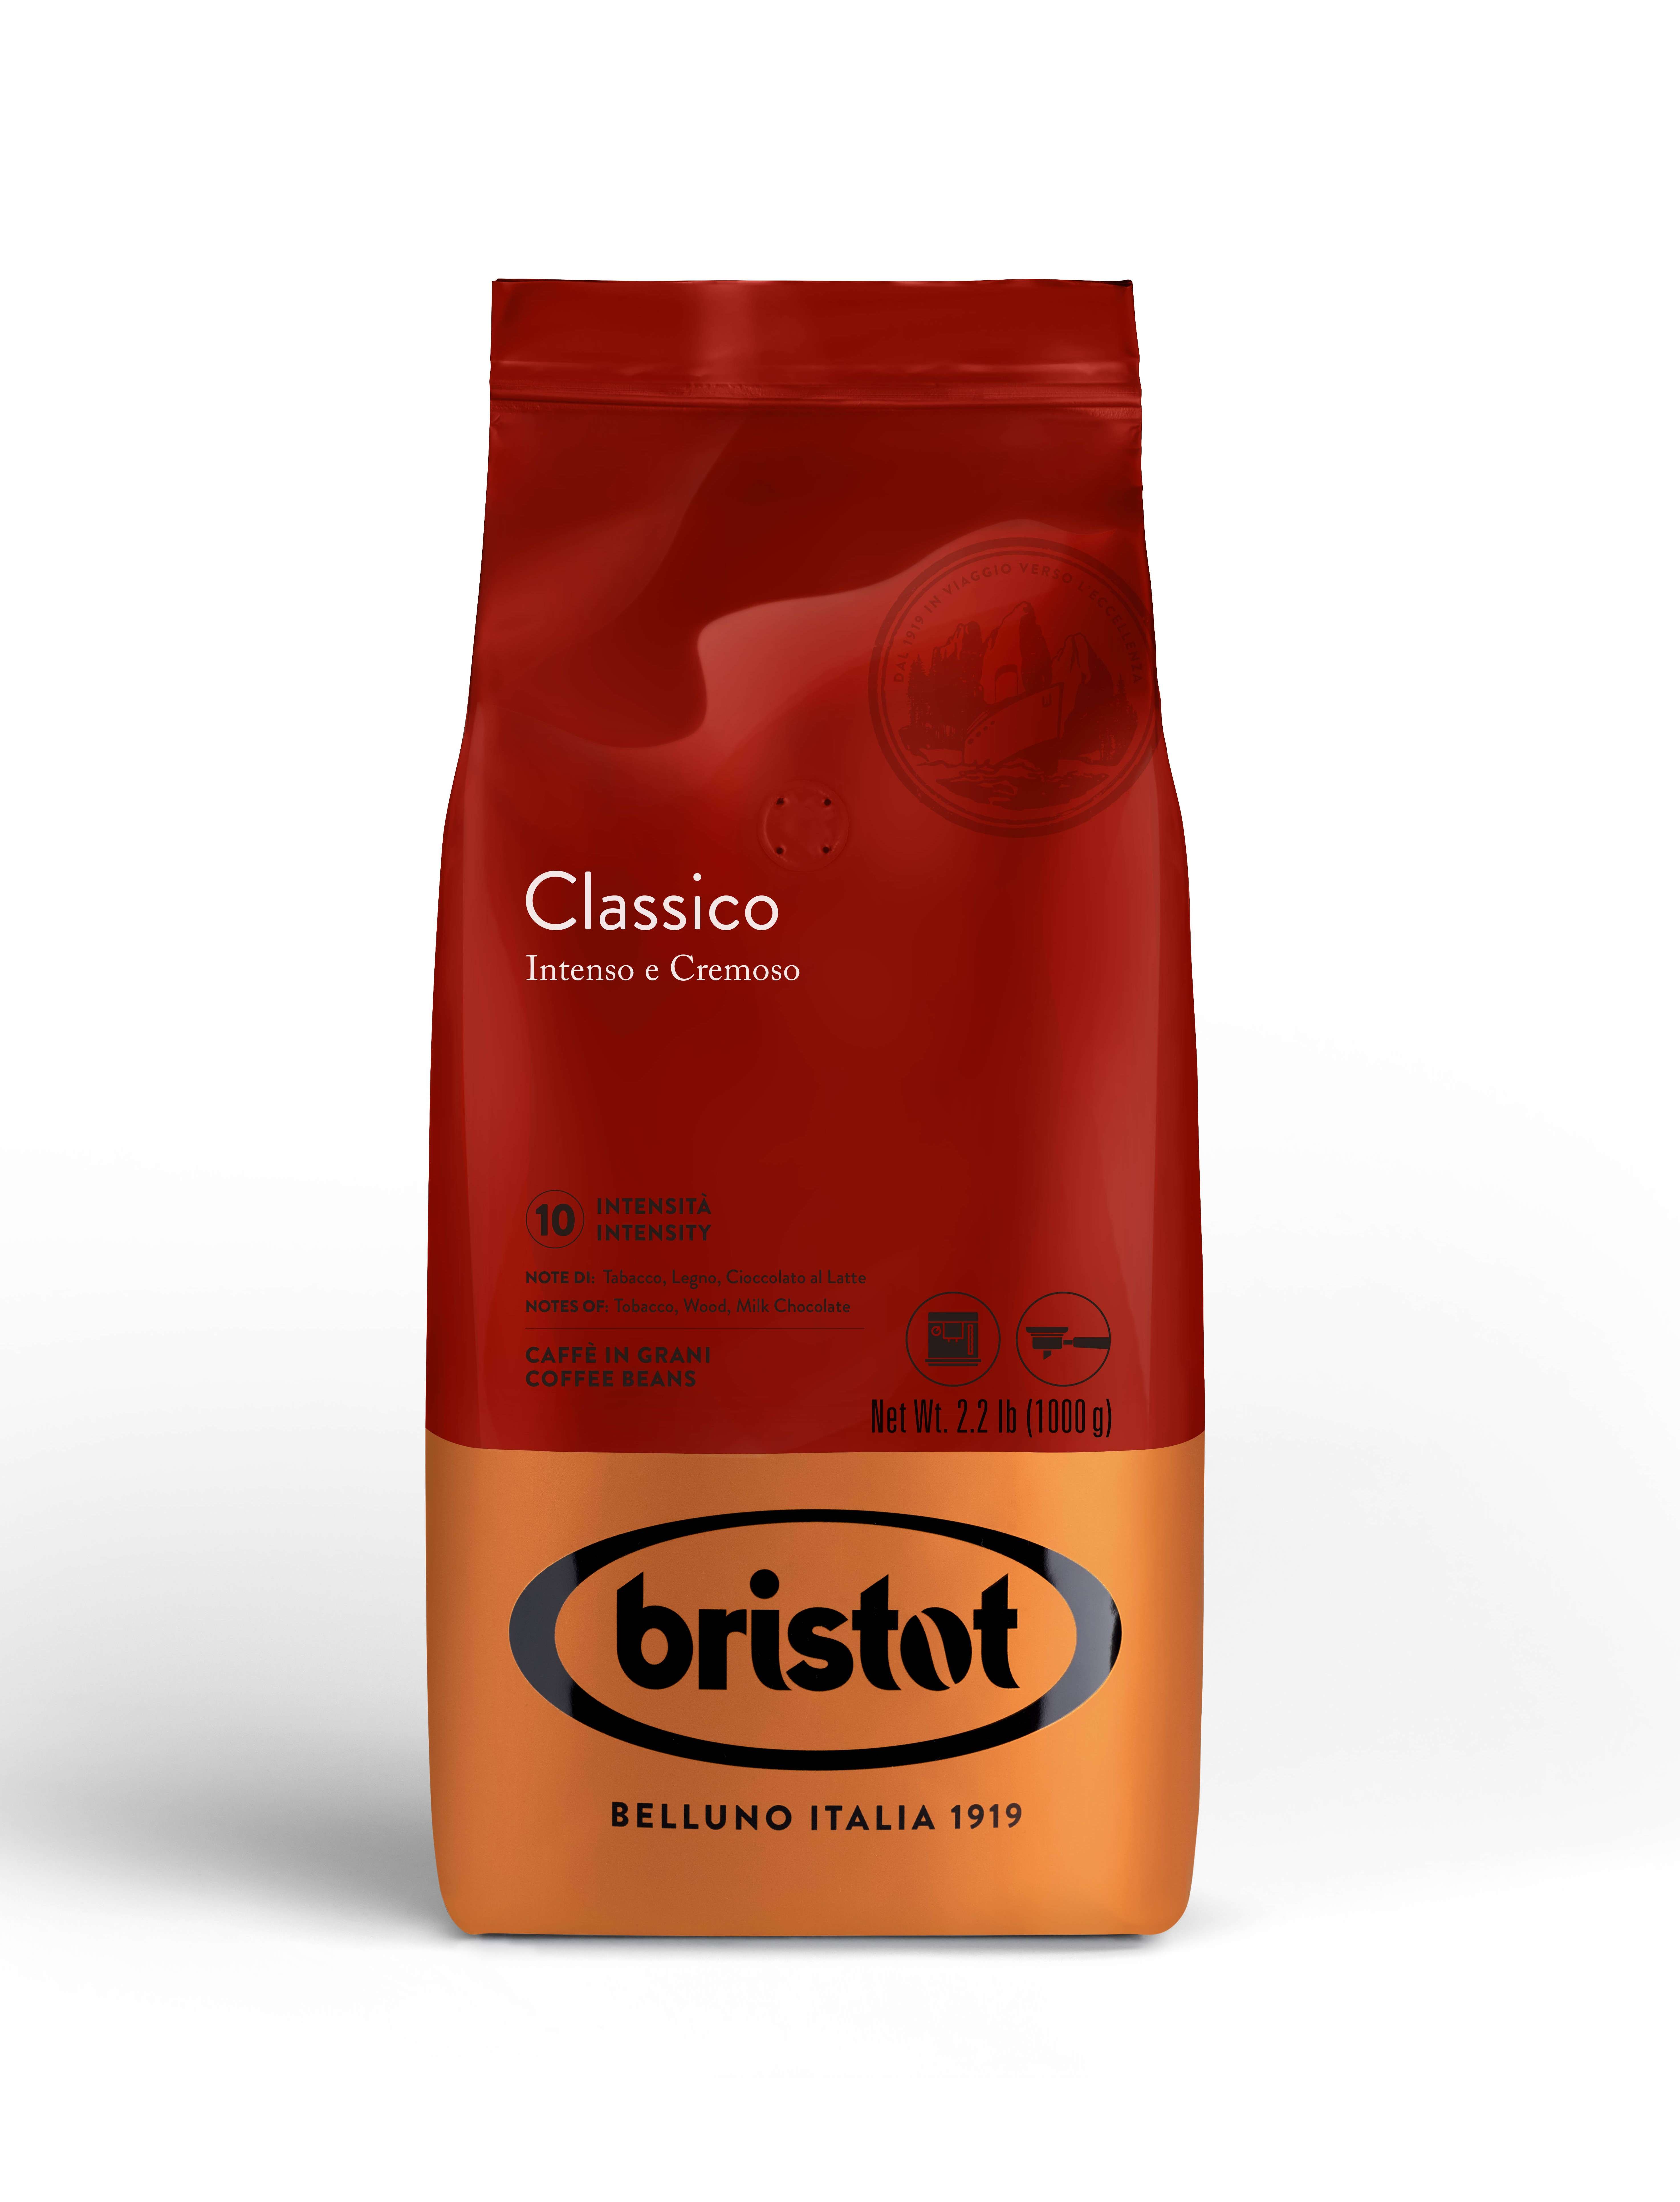 Bristot Classico Kaffee ganze Bohnen 1kg